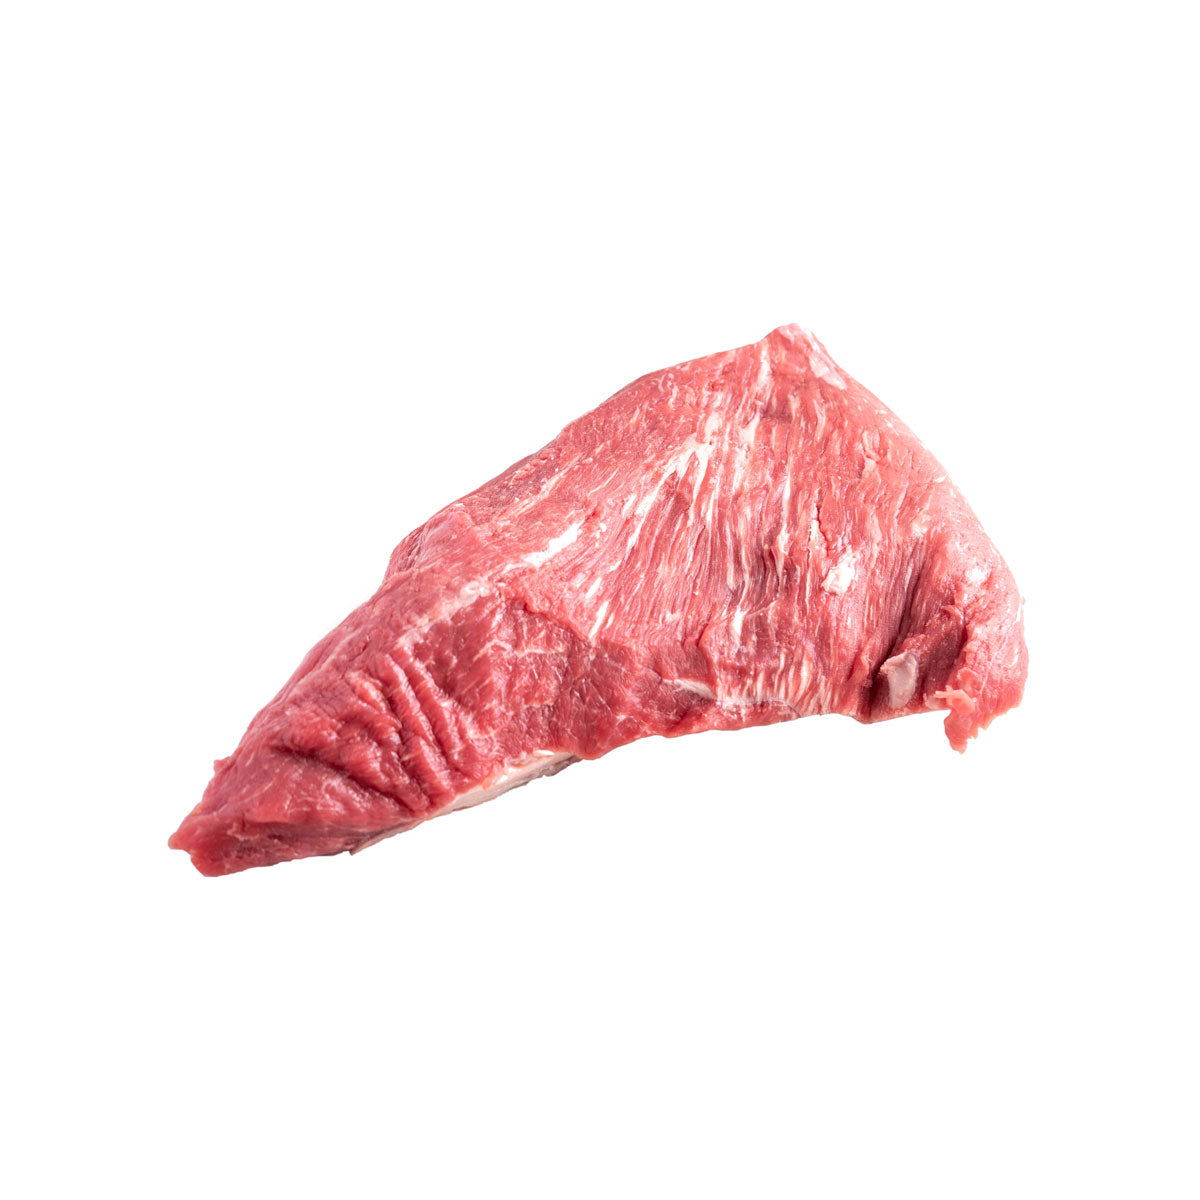 Demkota Ranch Beef Choice Beef Flat Iron Steak